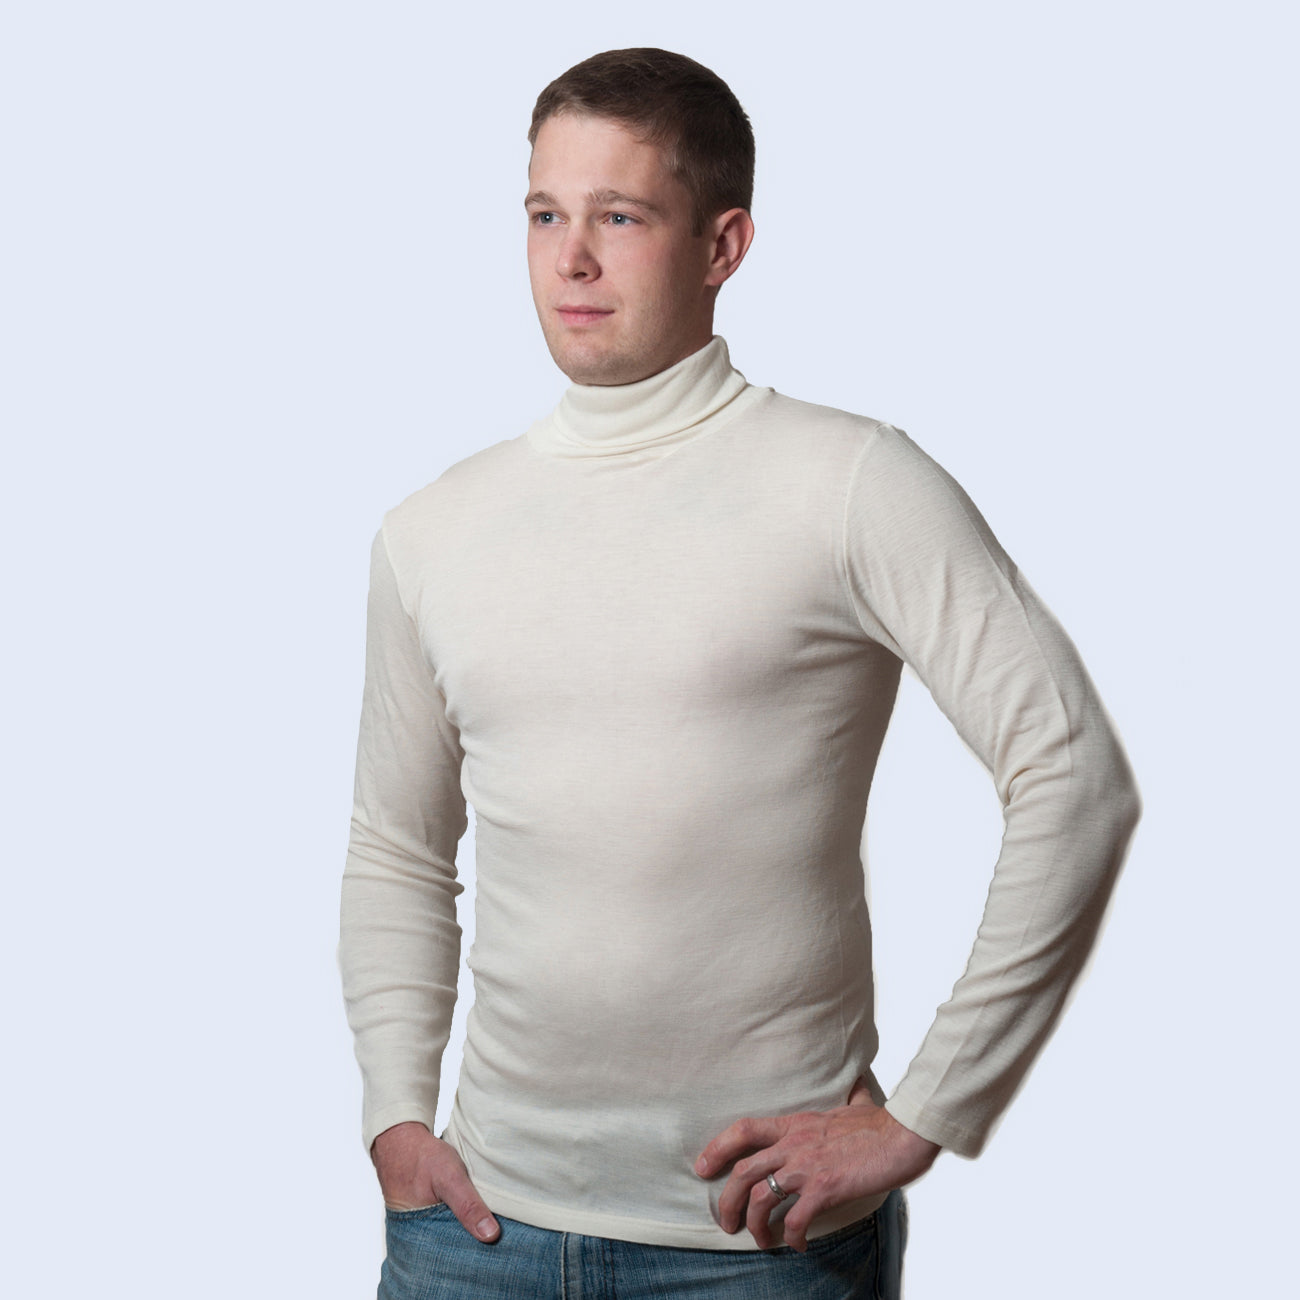 HOCOSA "Sport" Organic Wool/Silk Undershirt, Polo Neck, for Men or Women